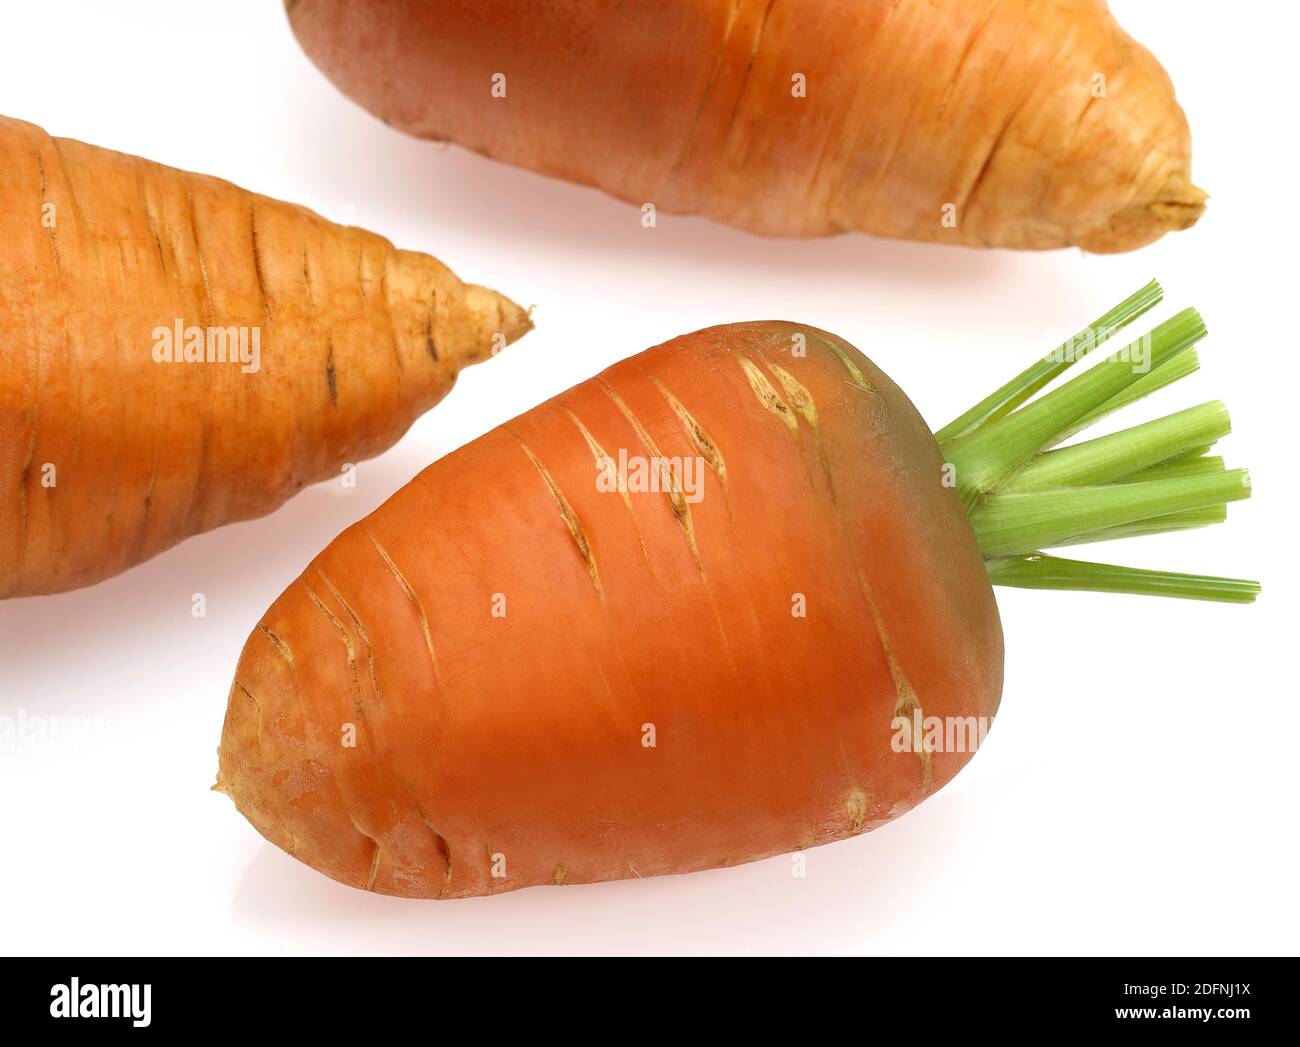 Carrot, daucus carota, Vegetable against White Background Stock Photo ...